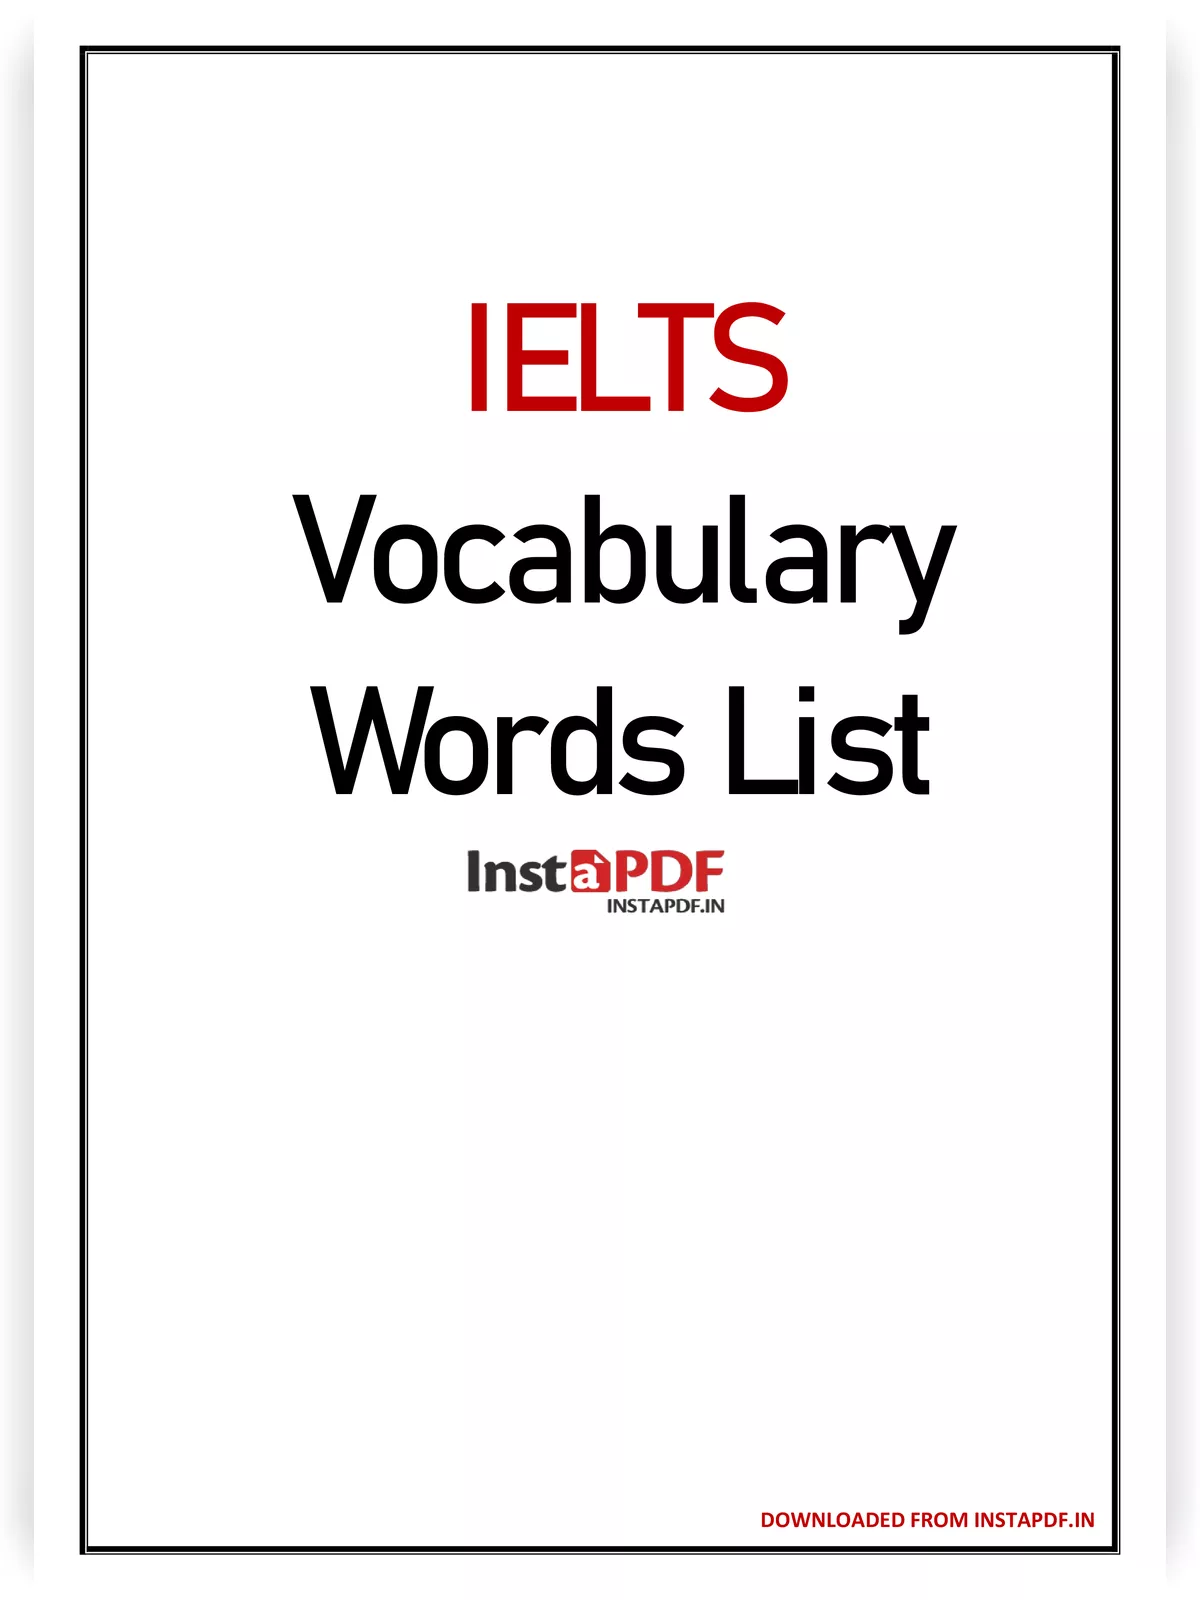 IELTS Vocabulary List